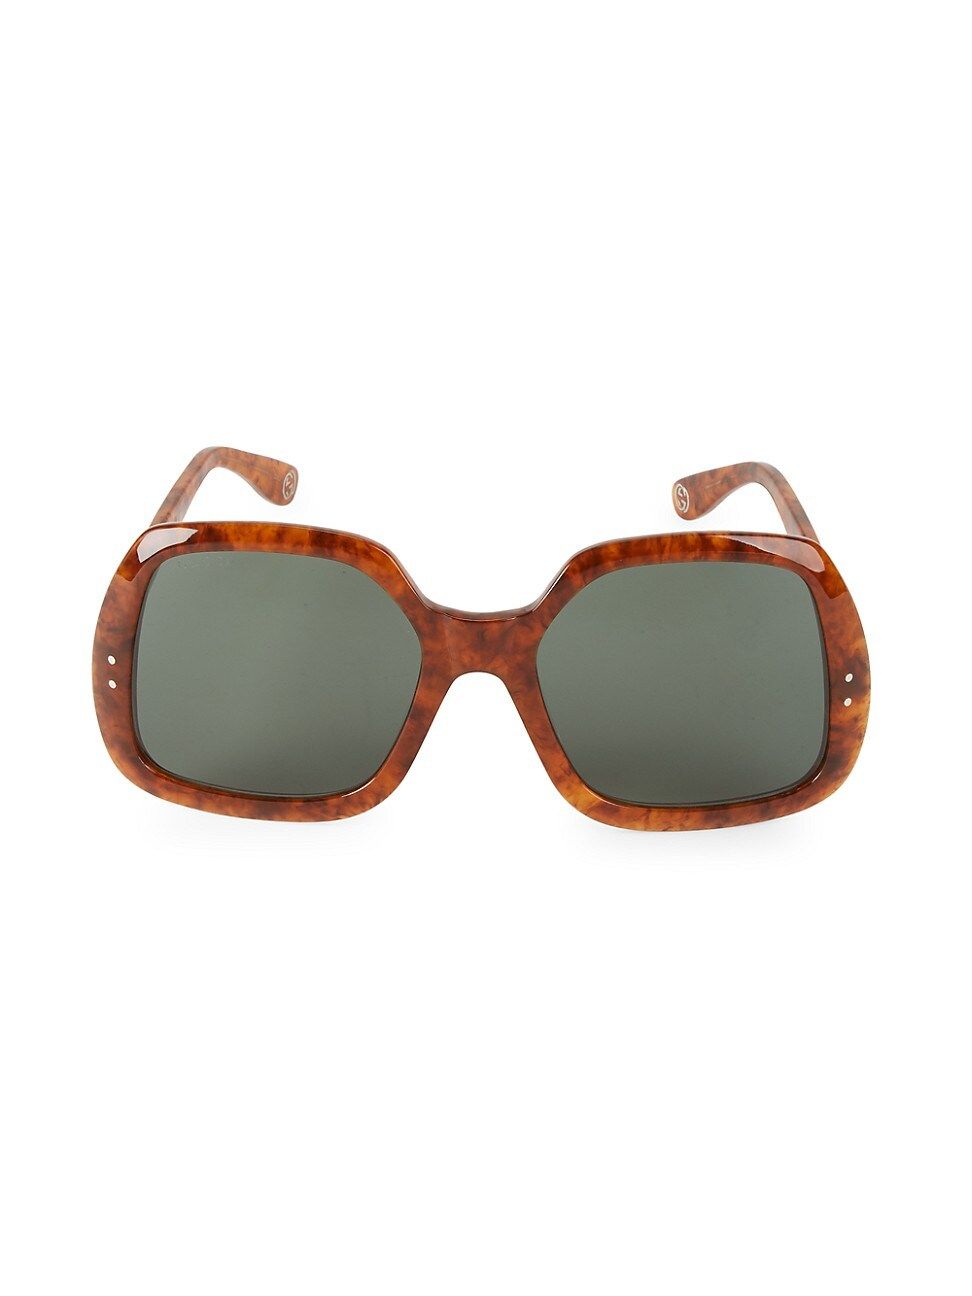 Gucci Women's GG0625S-002 58M Sunglasses - Avana | Saks Fifth Avenue